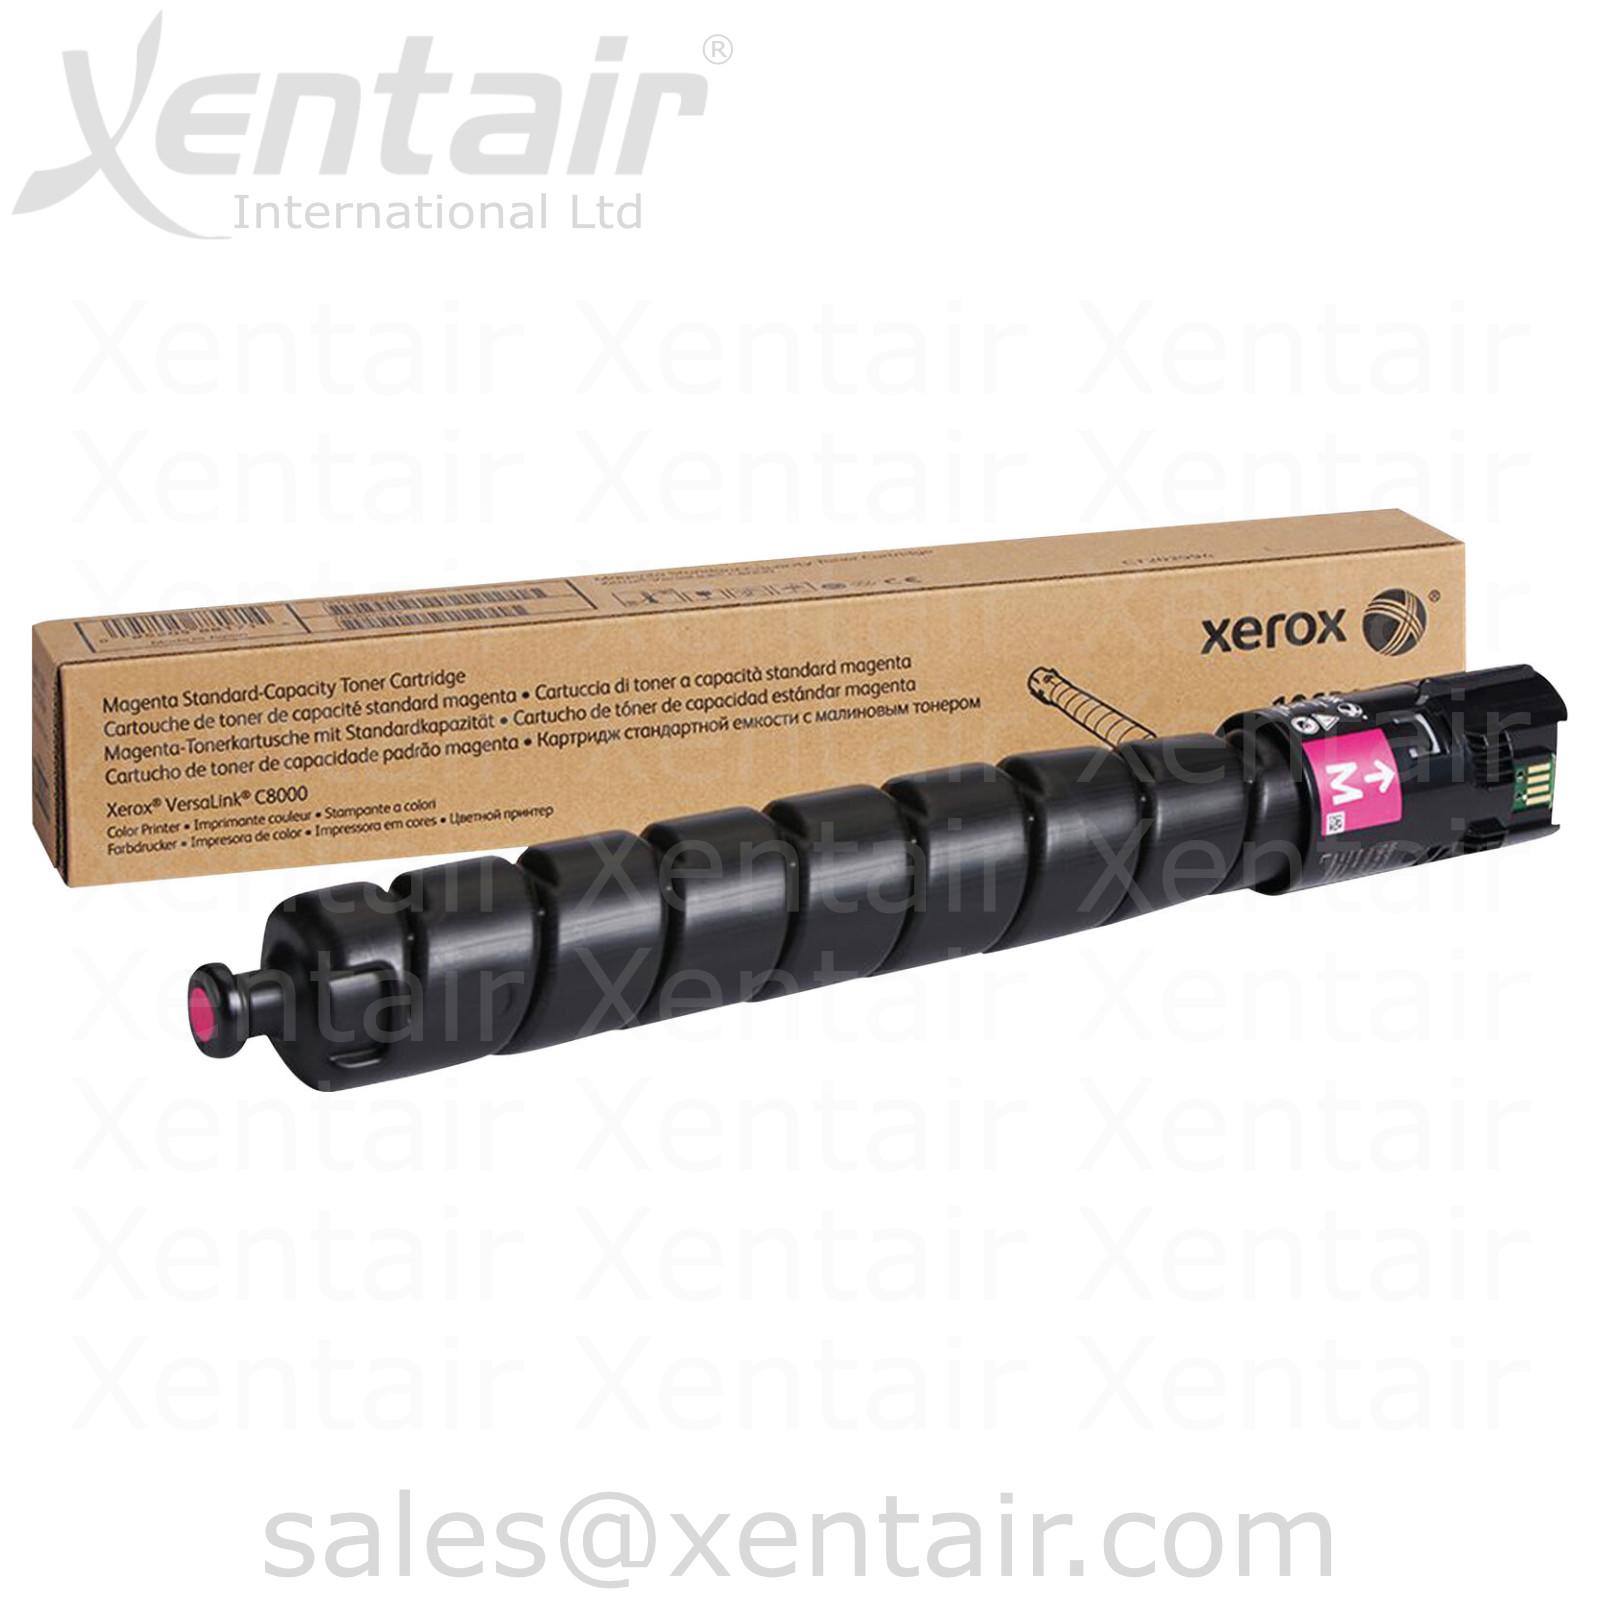 Xerox® VersaLink® C8000 Standard Capacity Magenta Toner Cartridge 106R04039